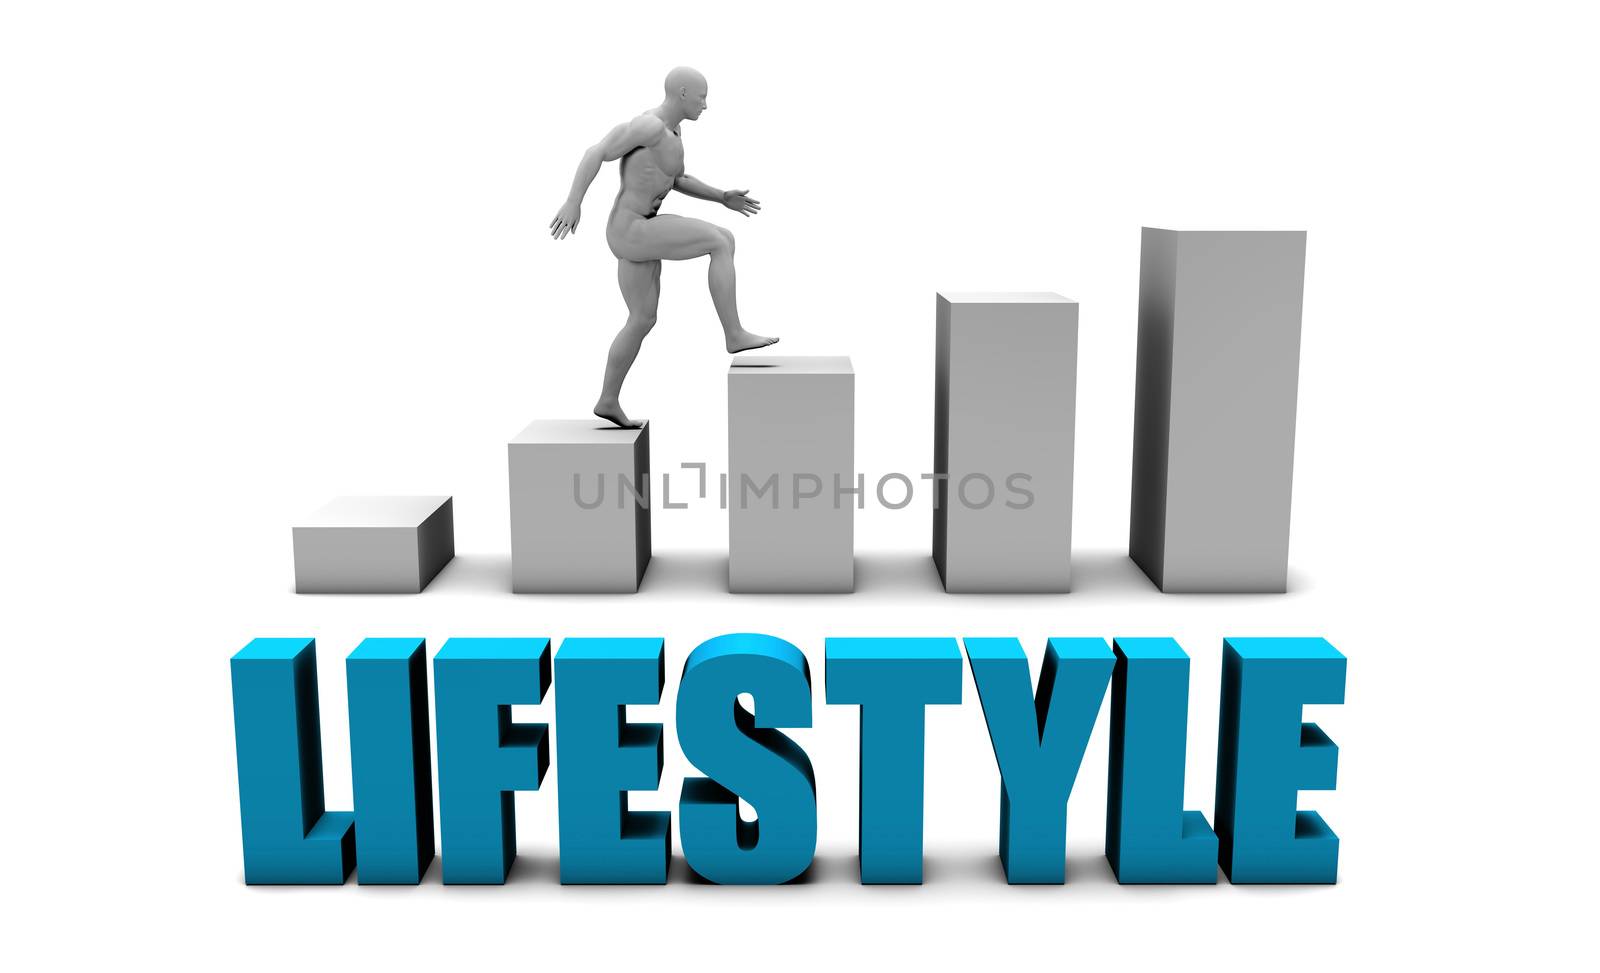 Lifestyle by kentoh